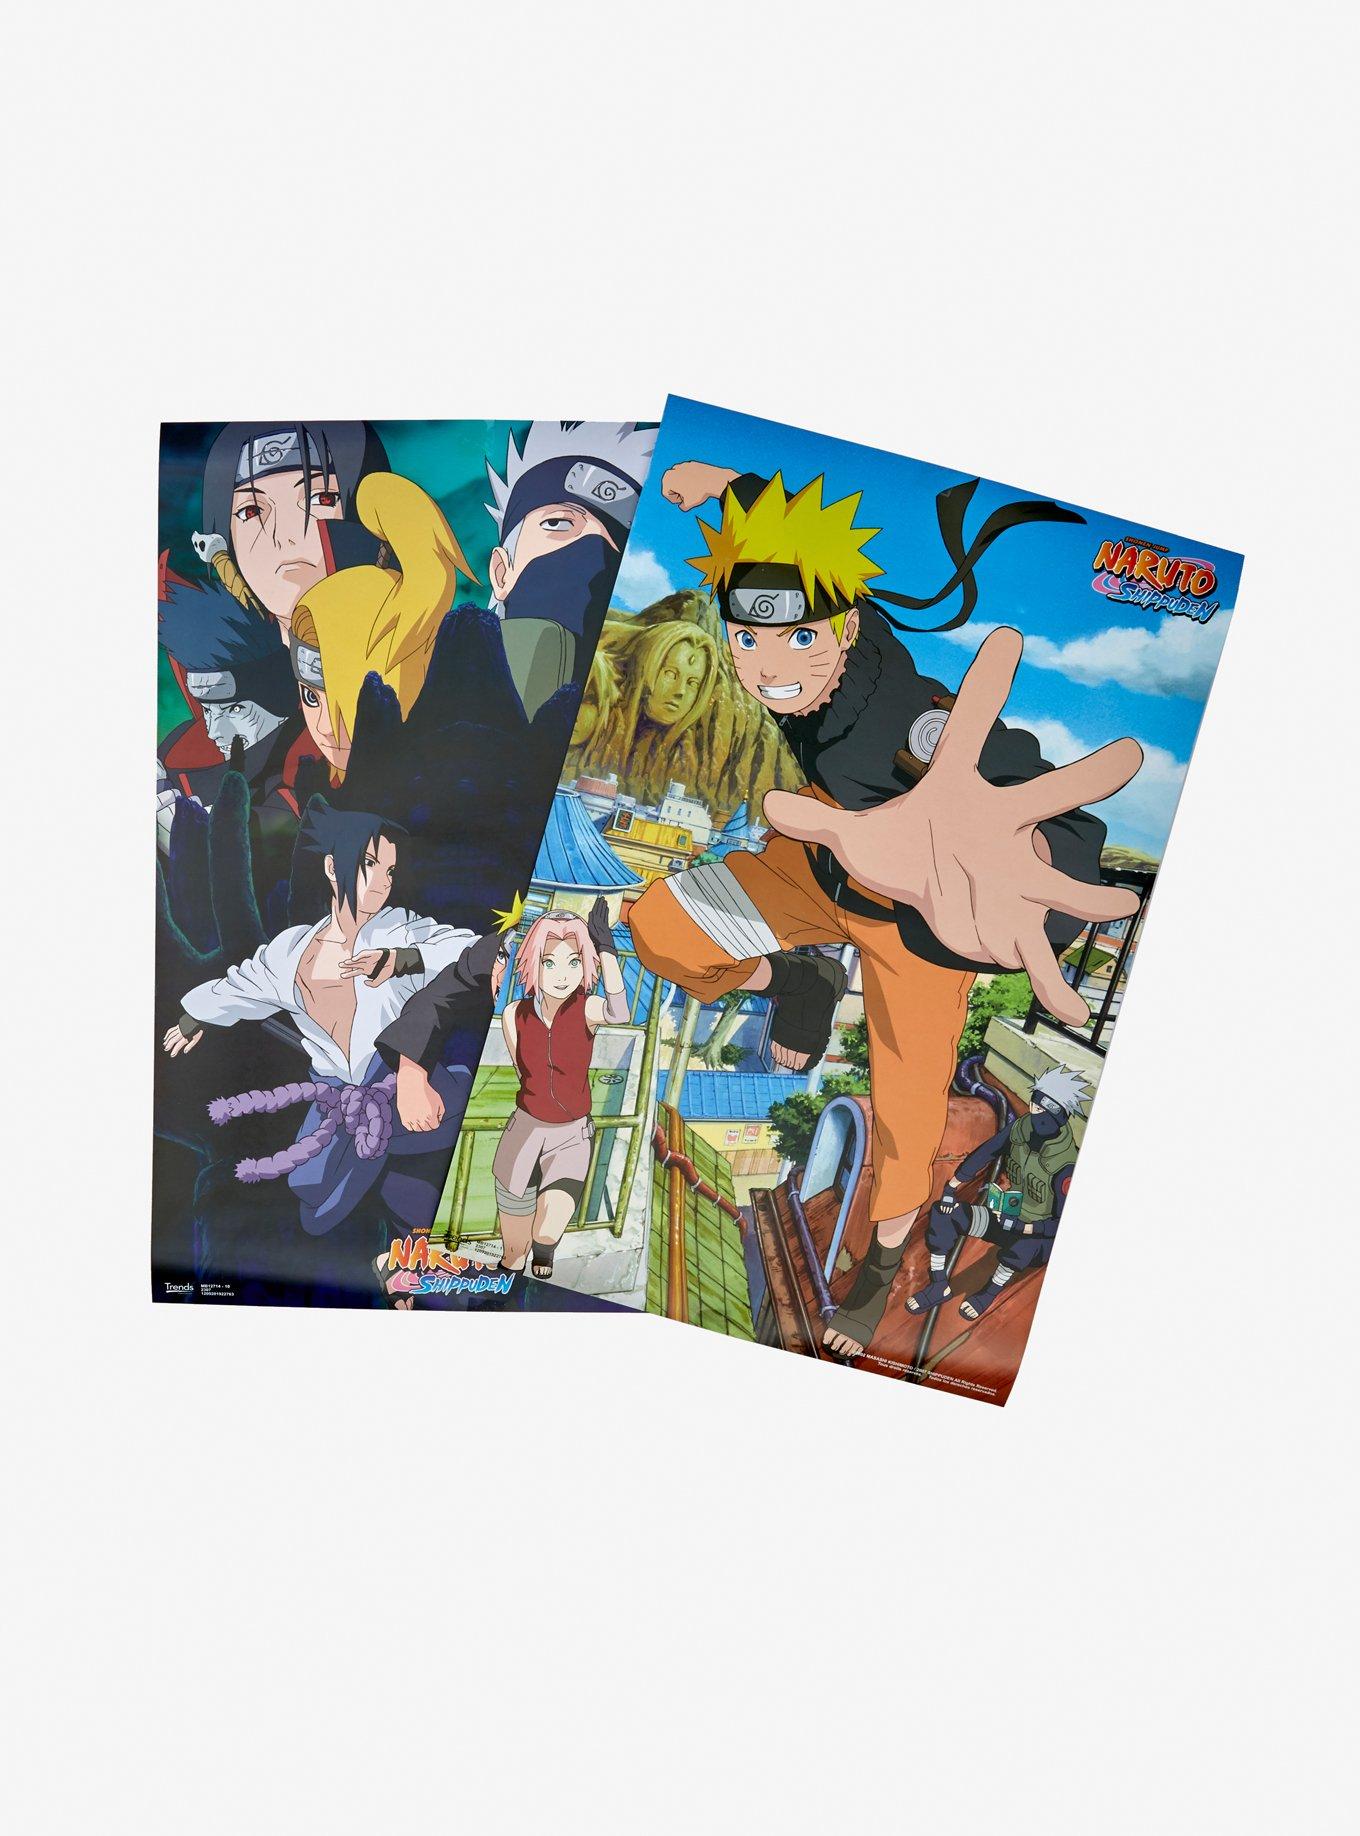 Naruto Shippuden. Colección en Blu-ray. Análisis del Box 1